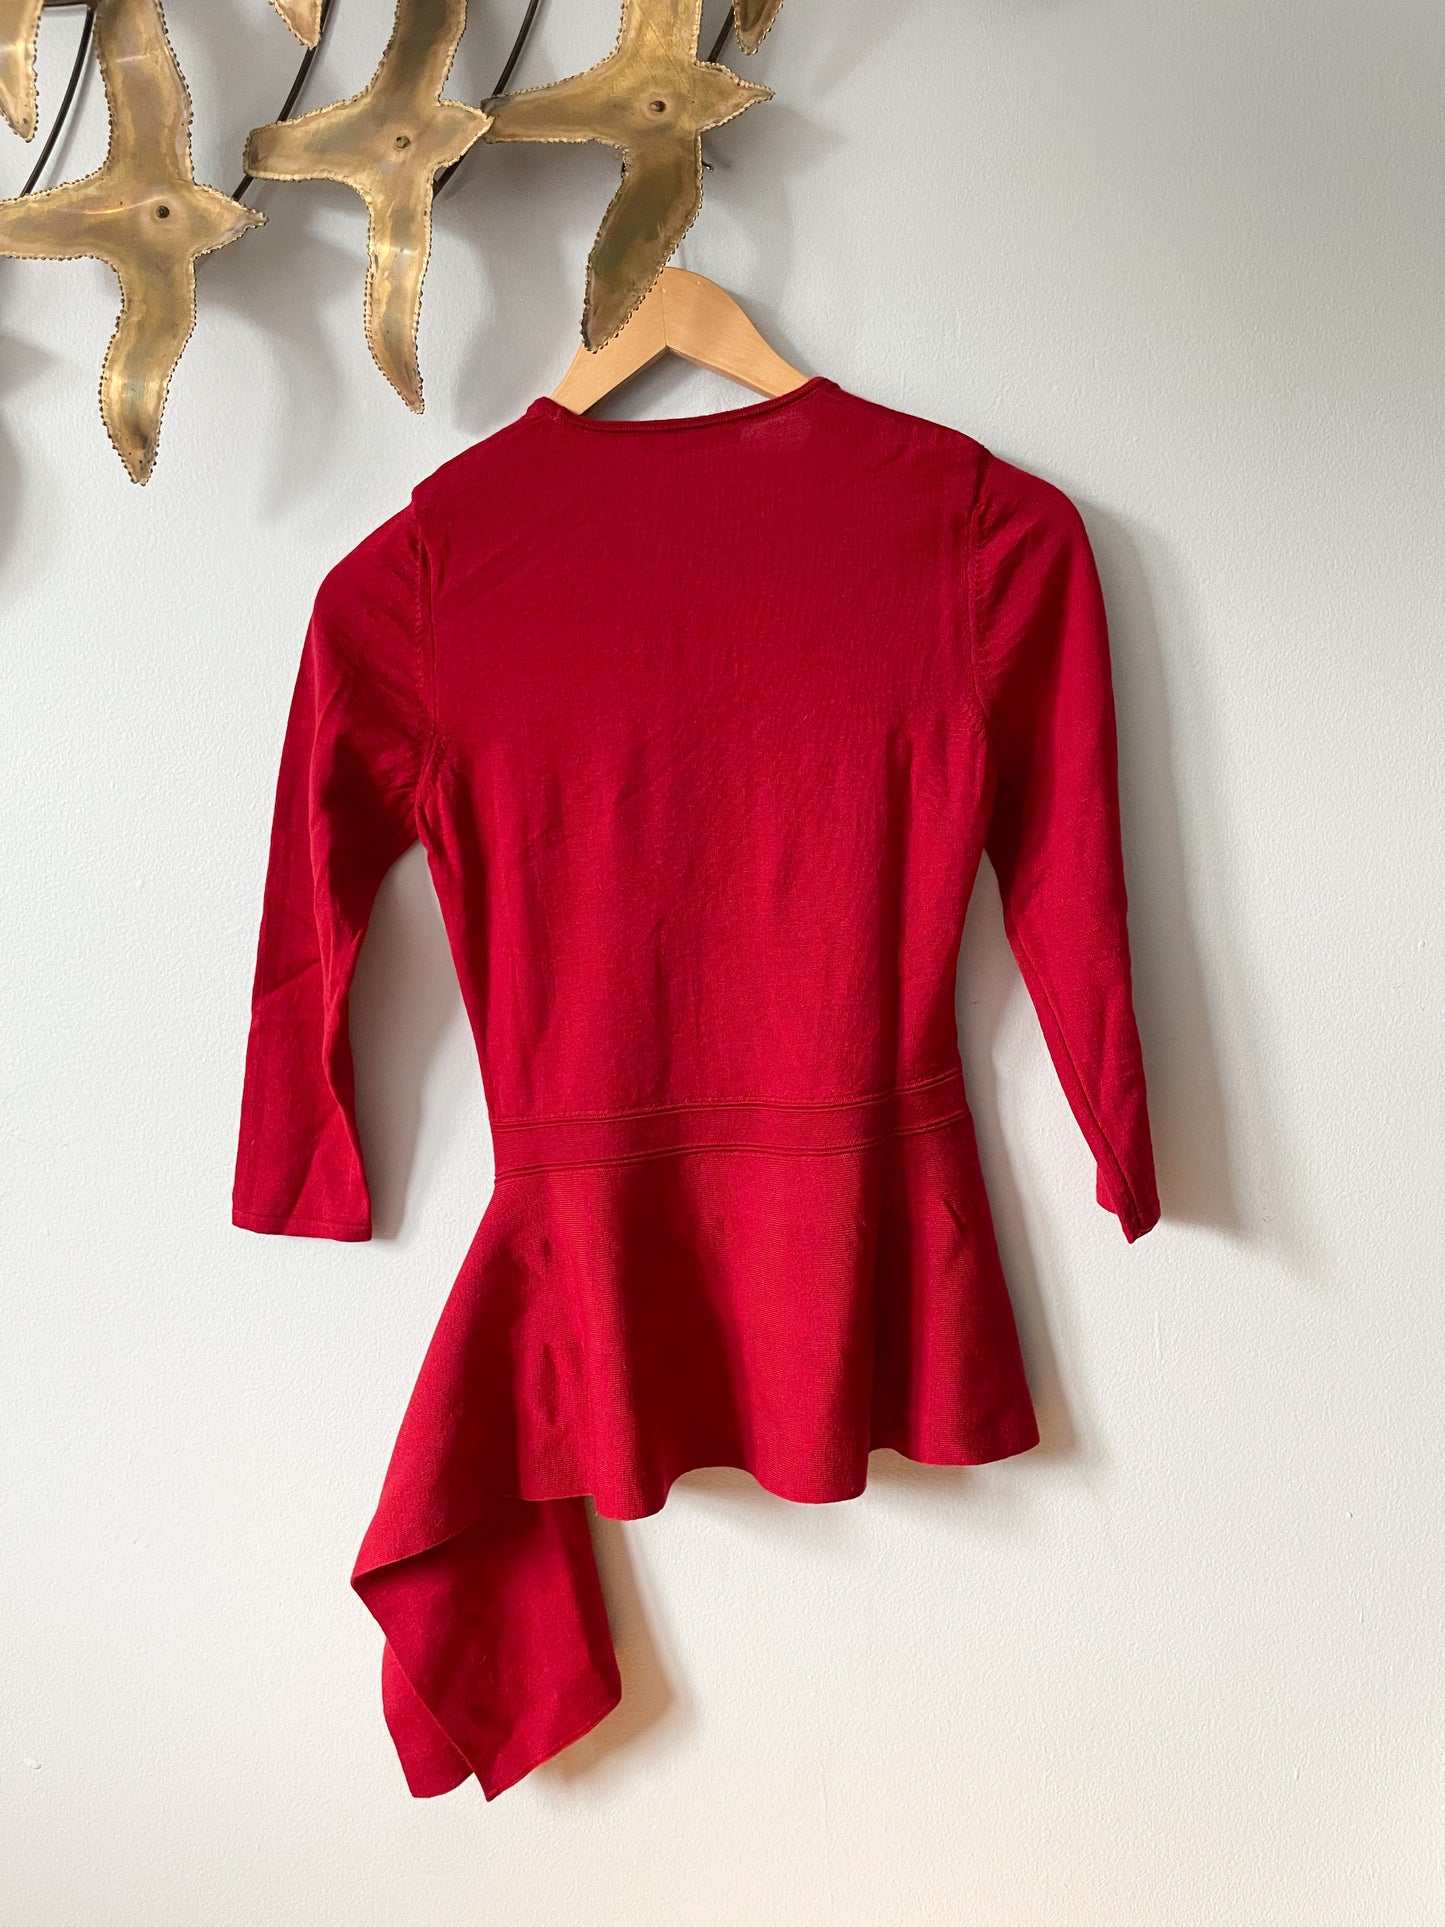 Carolina Herrera Red 100% Wool Asymmetrical Peplum 3/4 Sleeve Sweater Top - XS